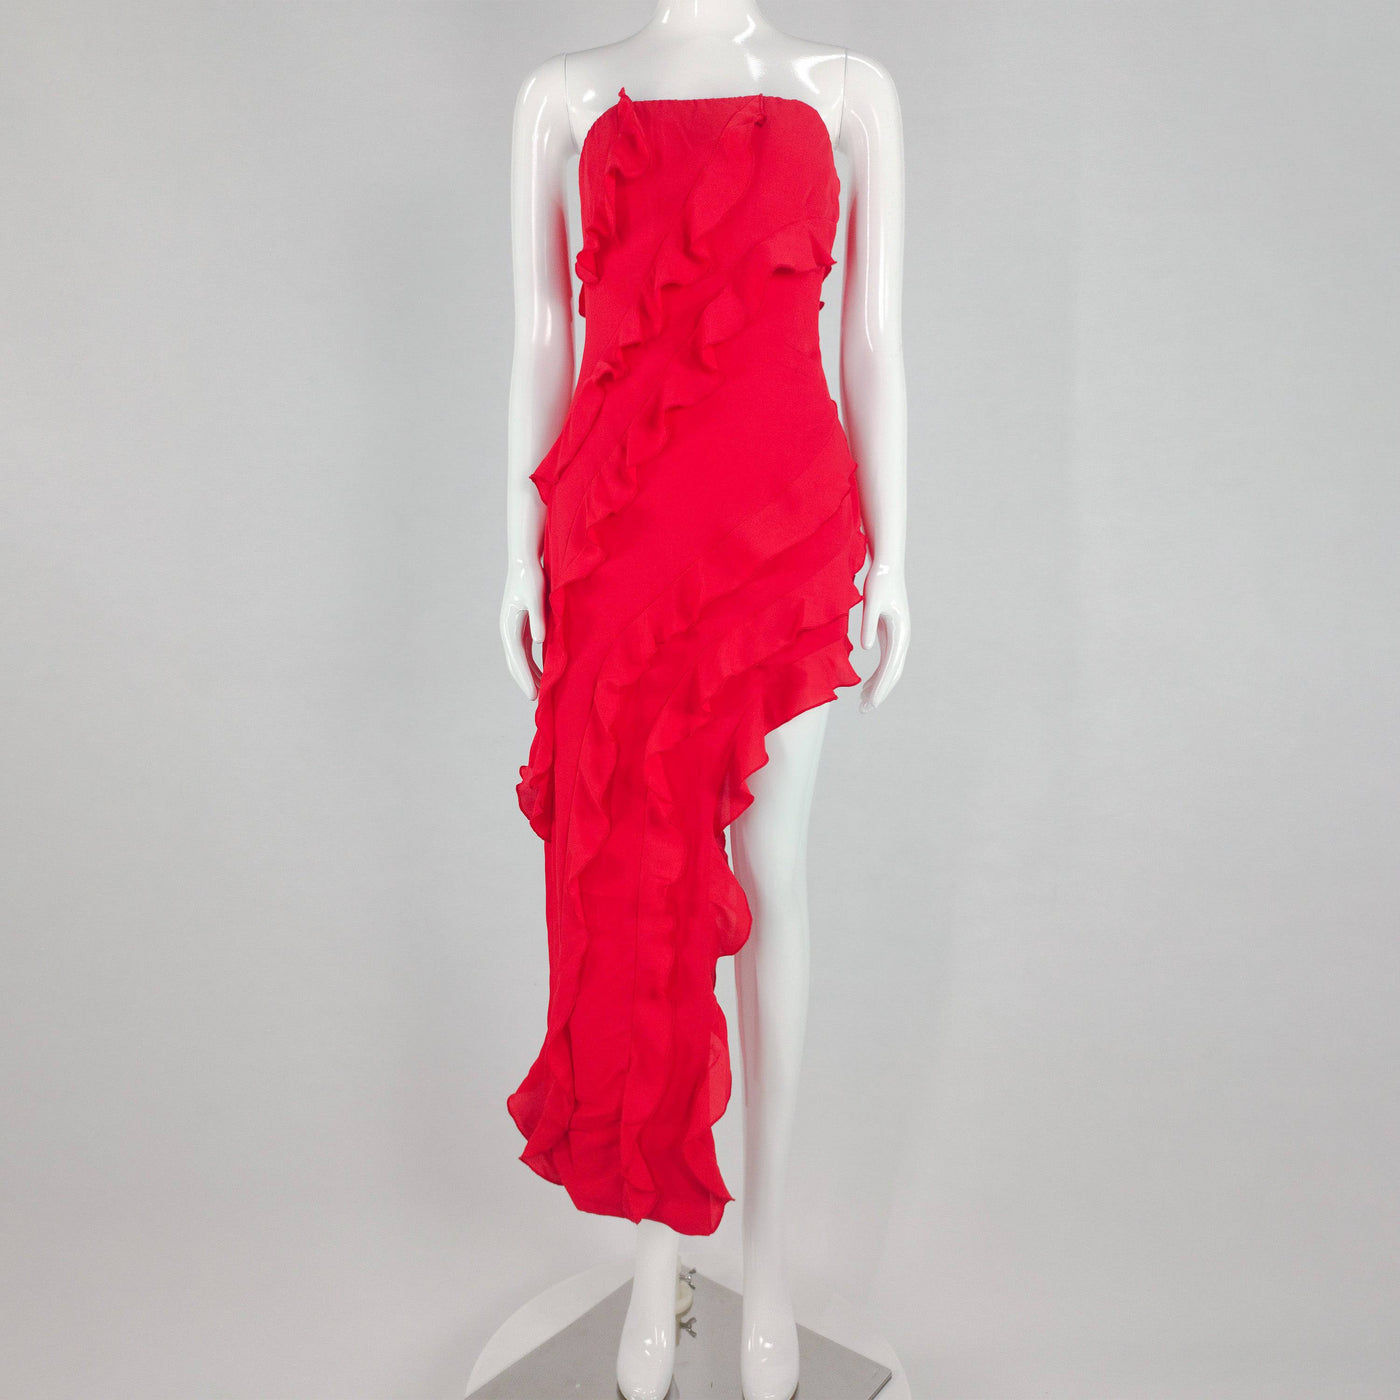 Kira Strapless High Slit Maxi Dress - Hot fashionista